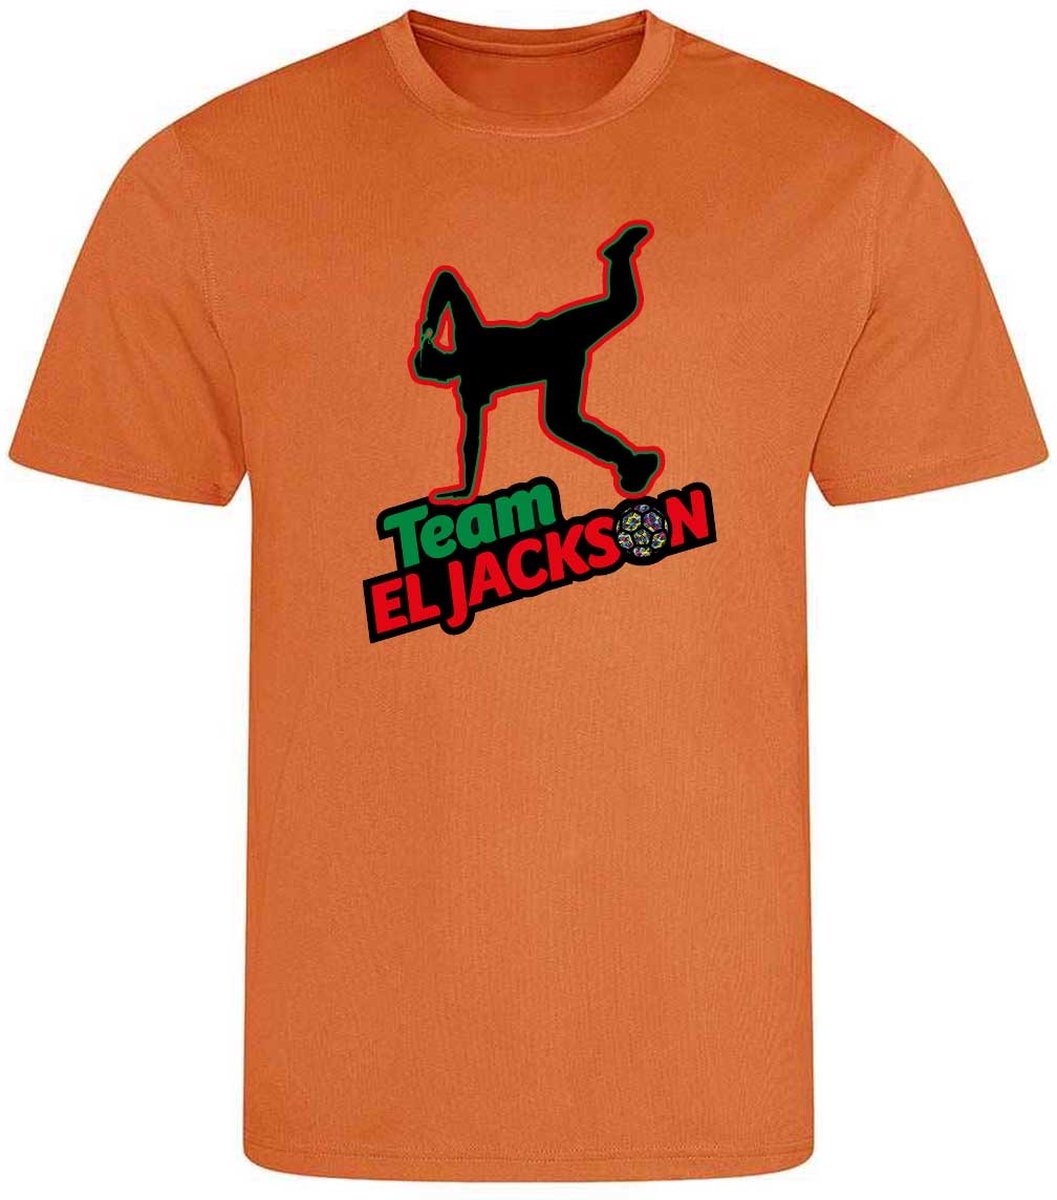 El Jackson T-Shirt - MOUNTAIN ORANGE - (164-XXL) - VOETBALSHIRT - SPORTSHIRT